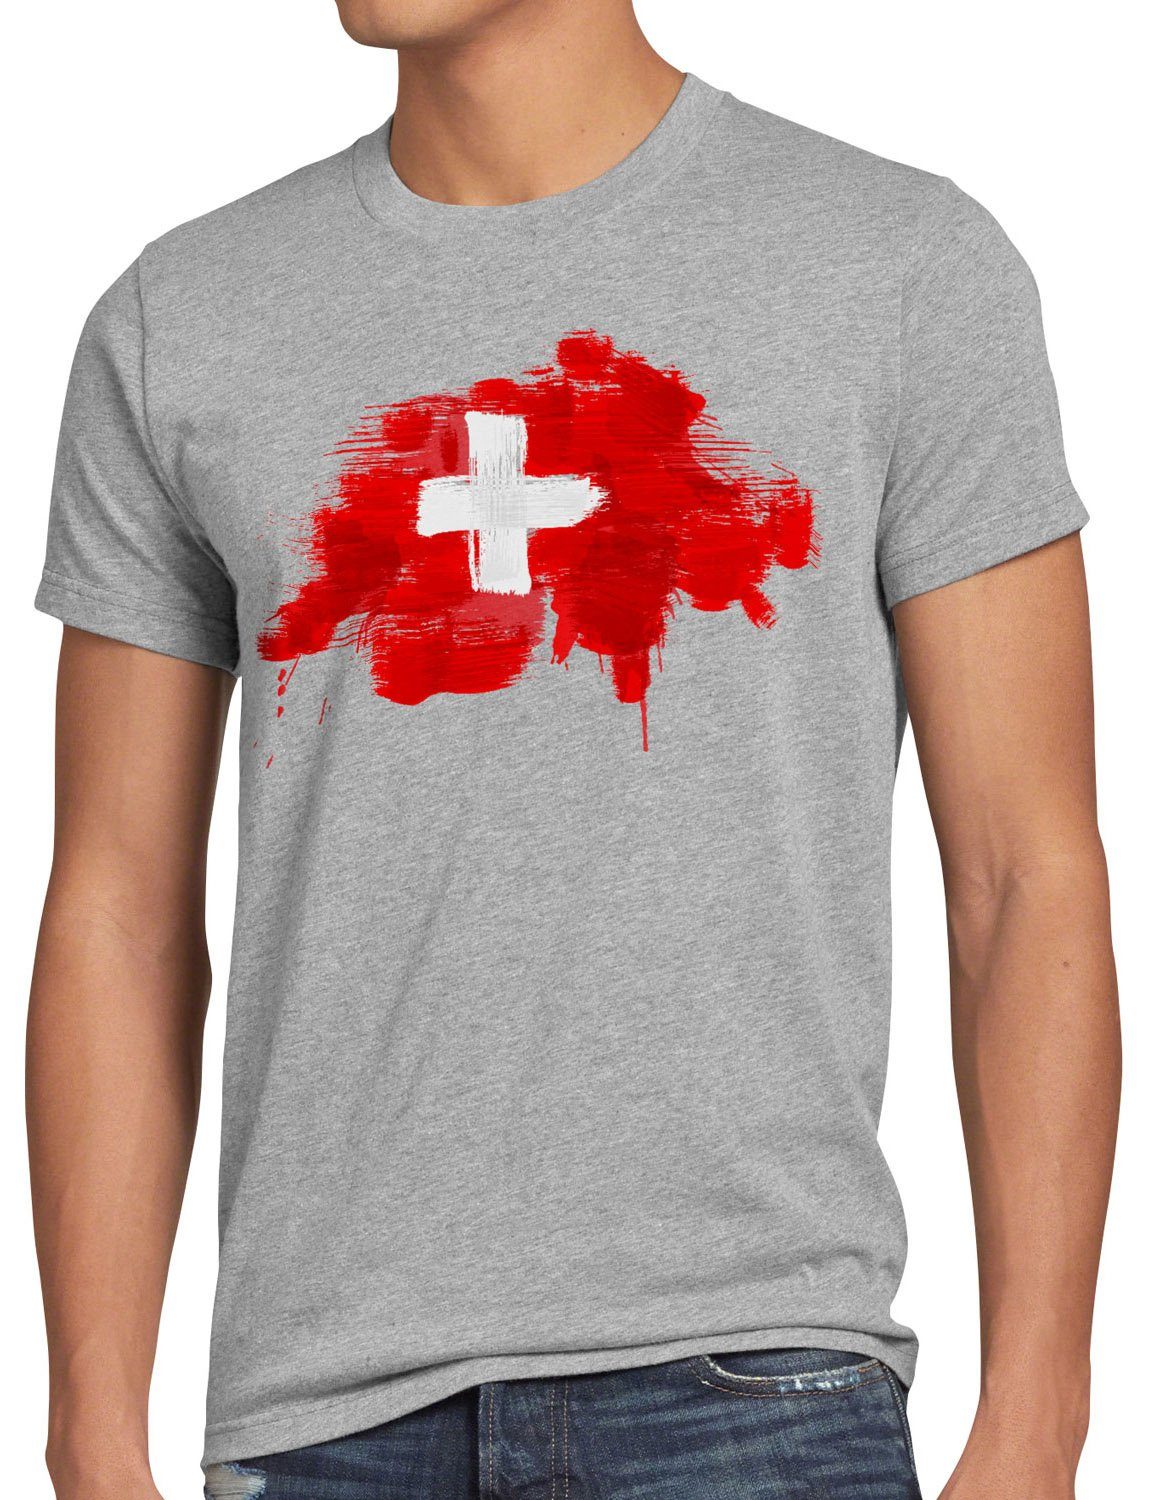 Fahne grau Herren T-Shirt meliert Flagge WM Sport EM style3 Print-Shirt Suisse Fußball Schweiz